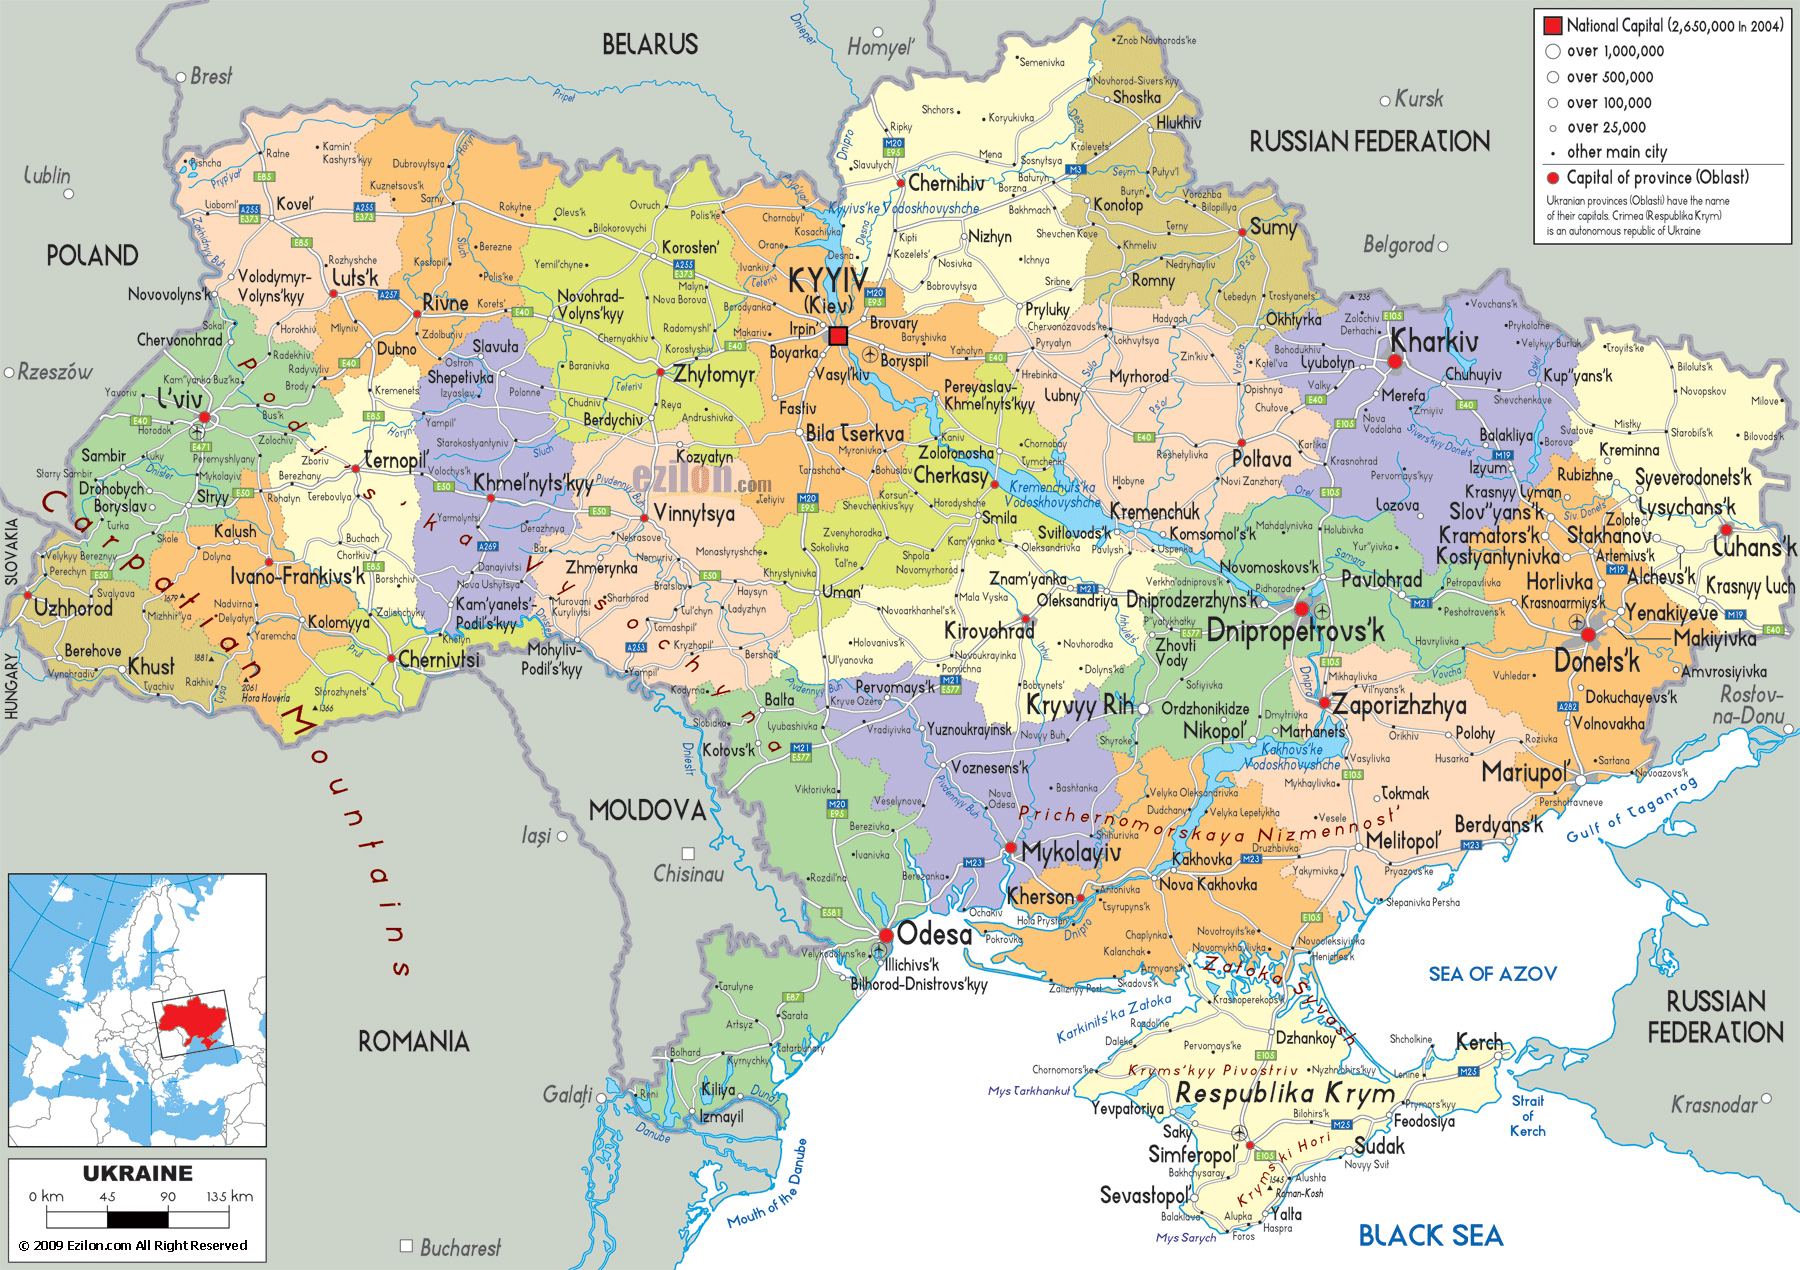 Карты Украины